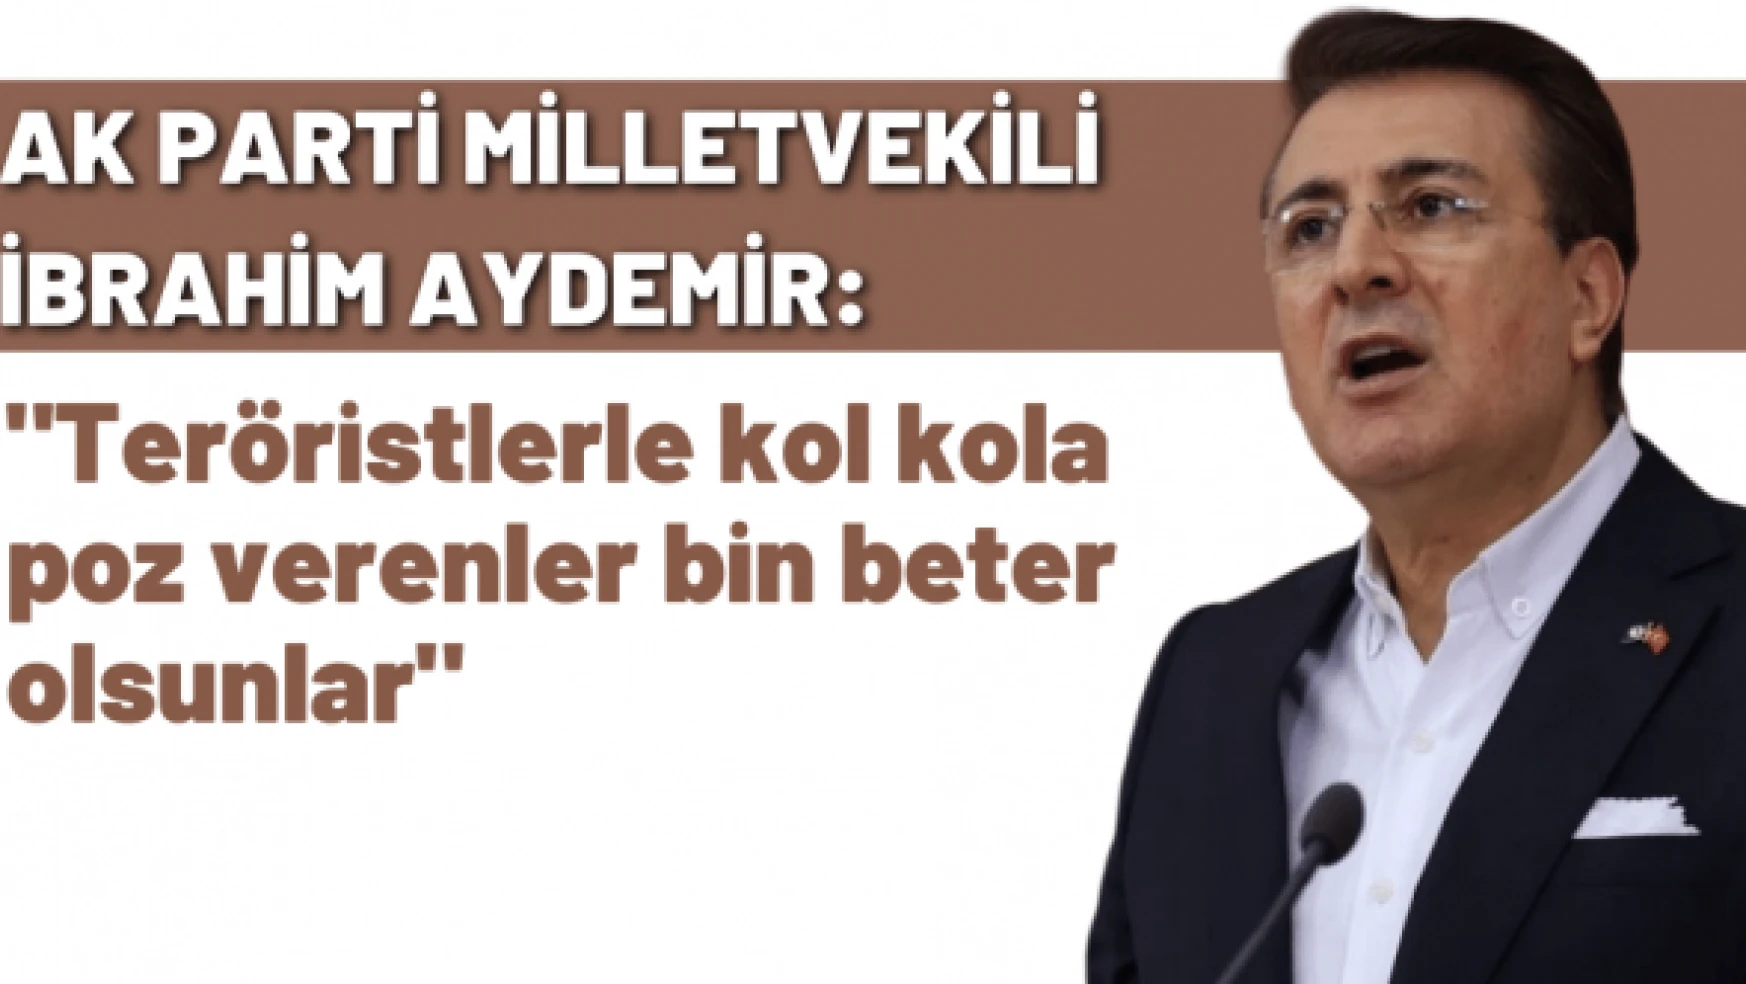 Millevekili Aydemir HDP Milletvekili Semra Güzel'e: &quotBin beter olsun"